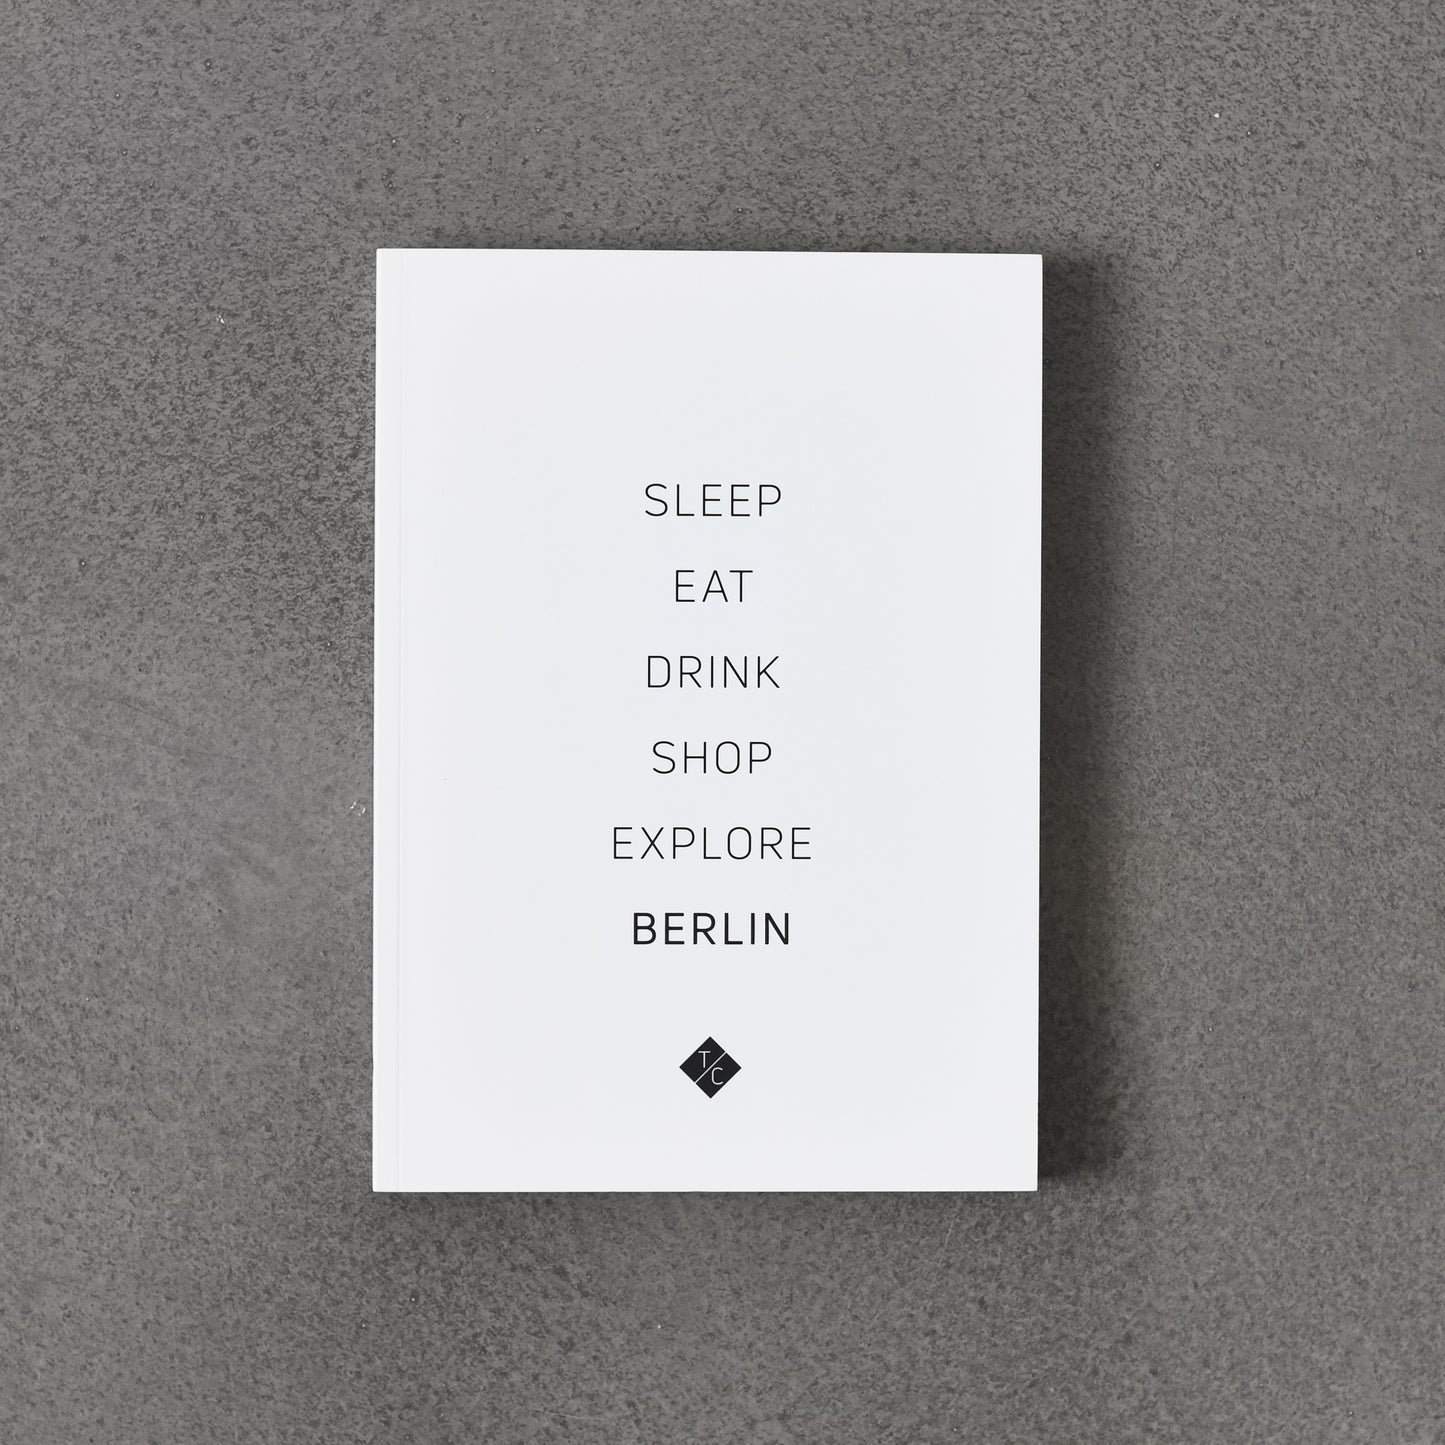 Sleep, Eat, Drink, Shop, Explore BERLIN